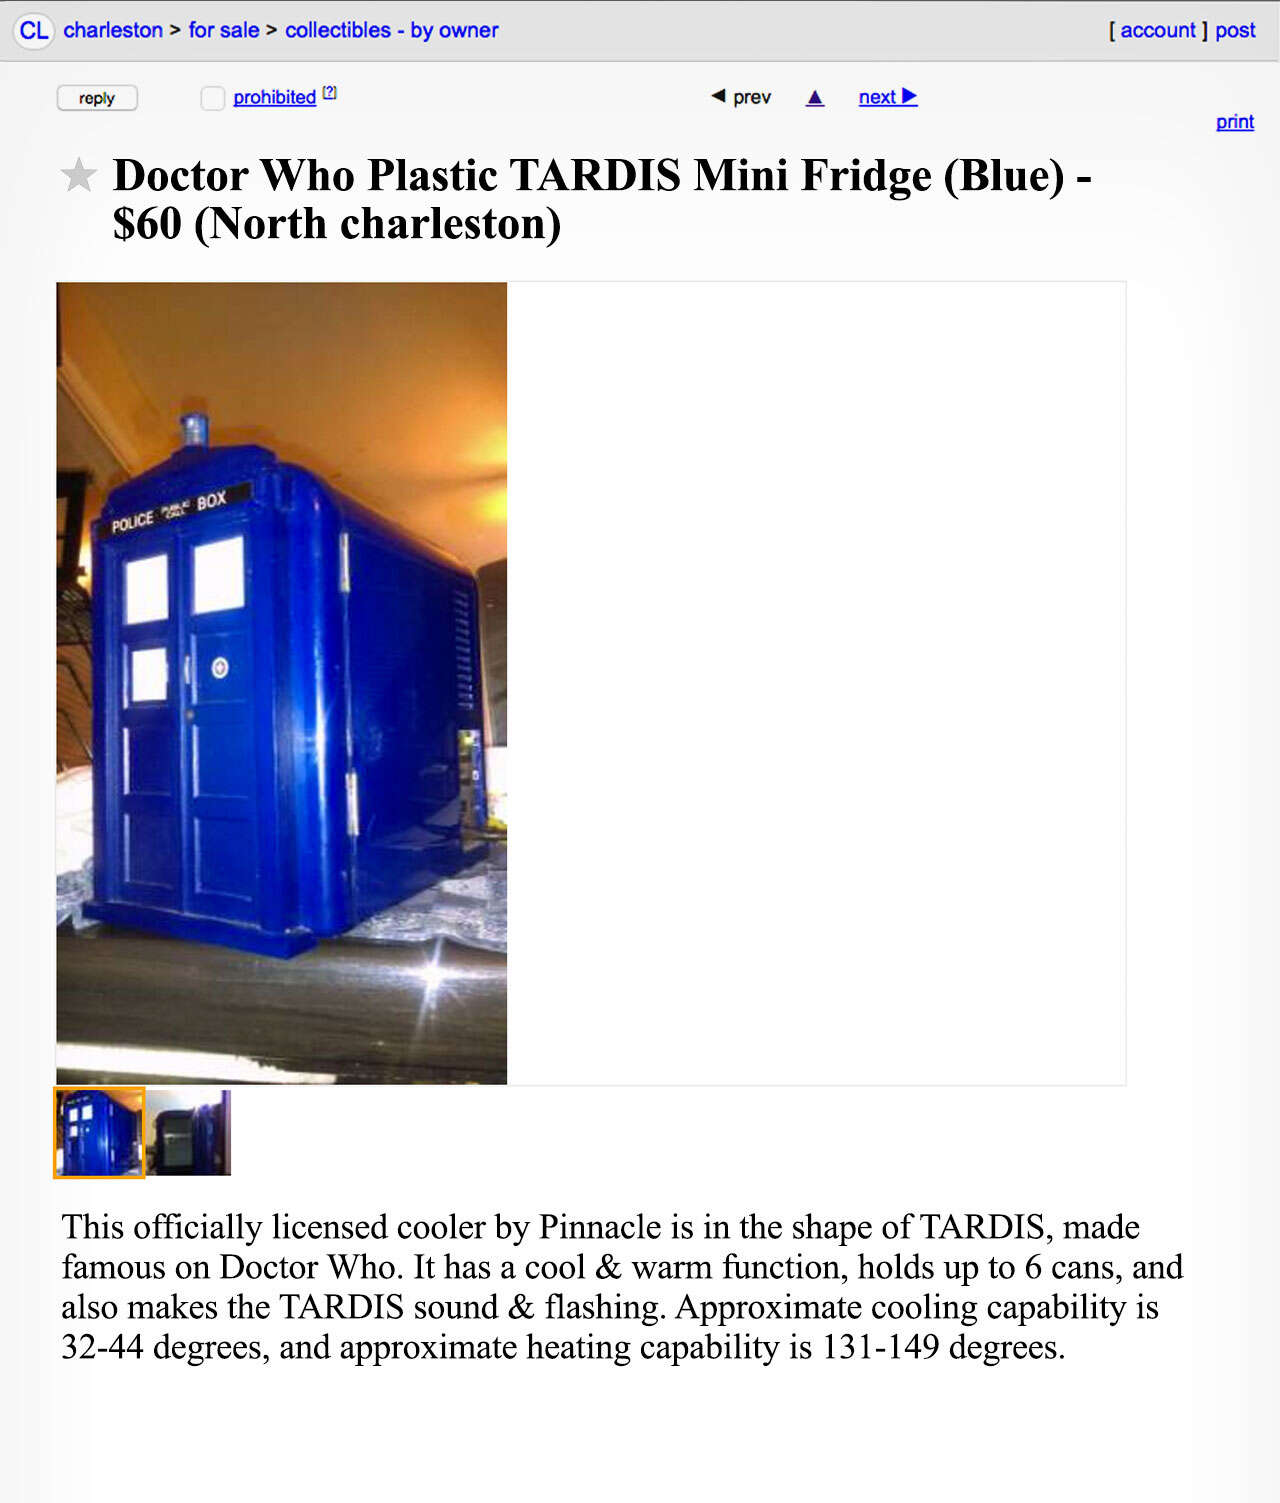 A Craigslist advertisement for a TARDIS cooler. 